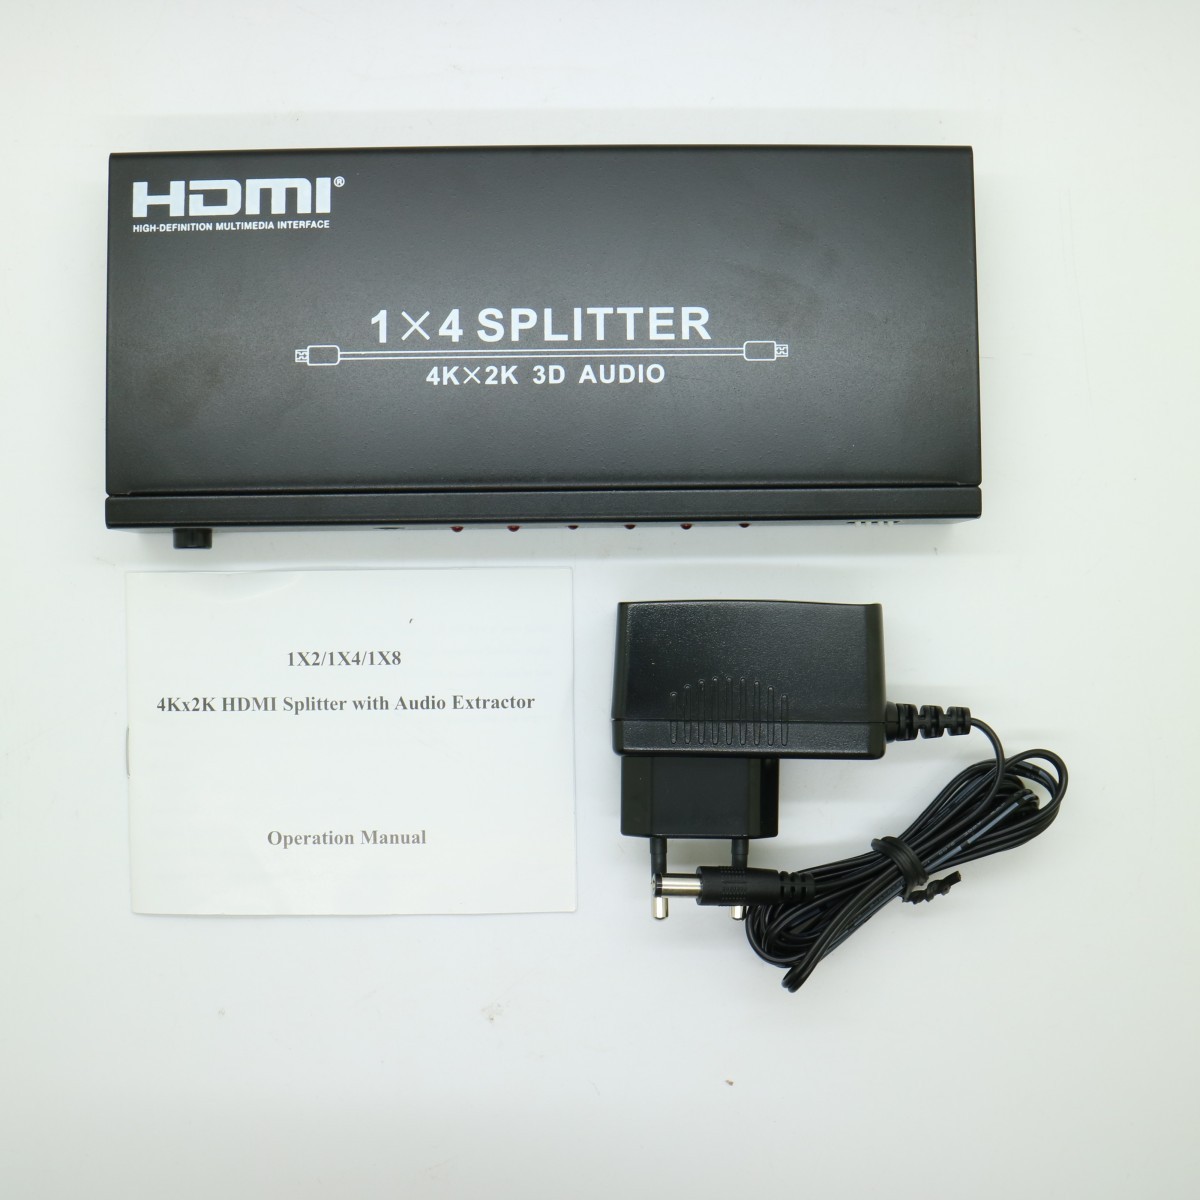 VOXLINK 4Kx2K HDMI Splitter with Audio Extractor1X4